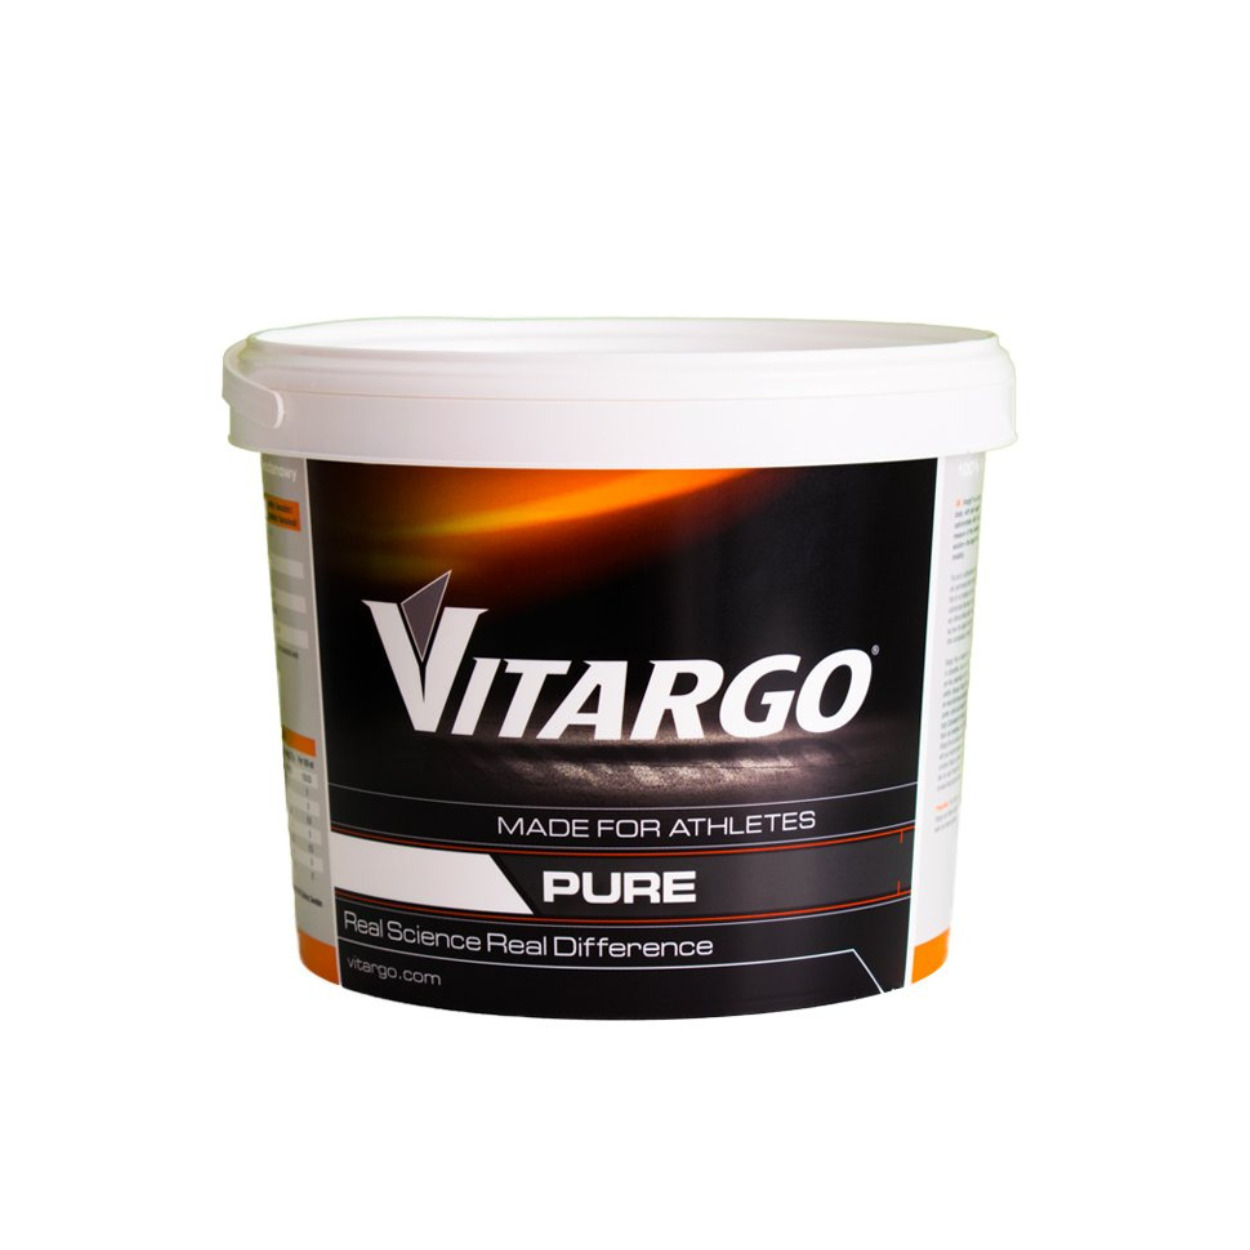 Vitargo Pure (2kg)